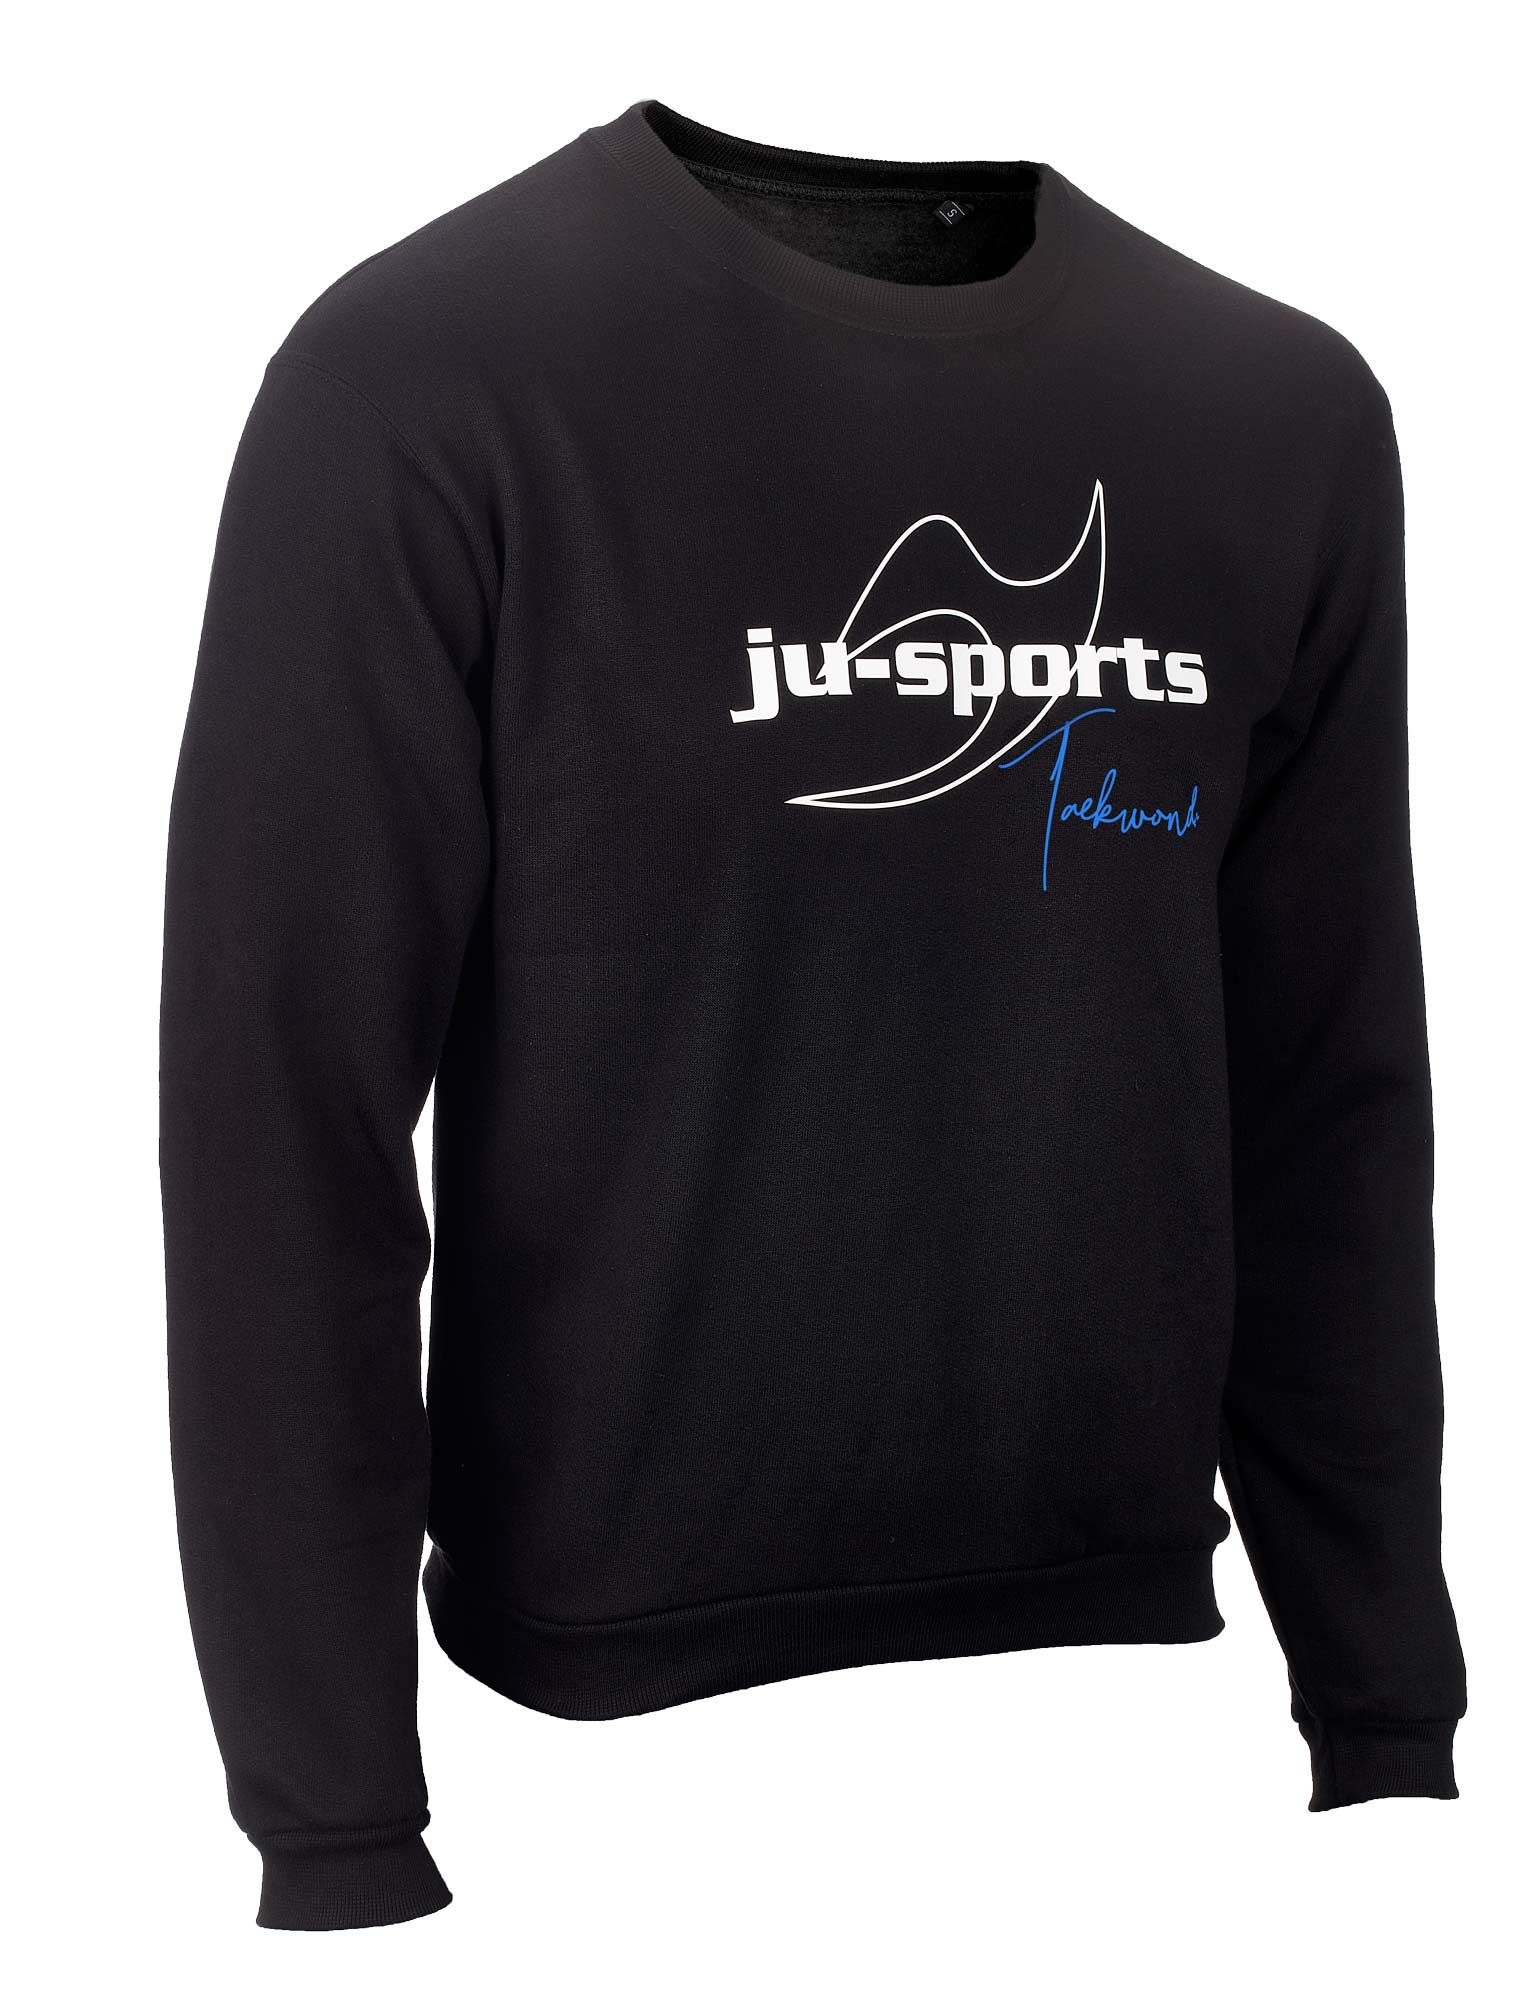 Ju-Sports Signature Line Sweater Taekwondo 